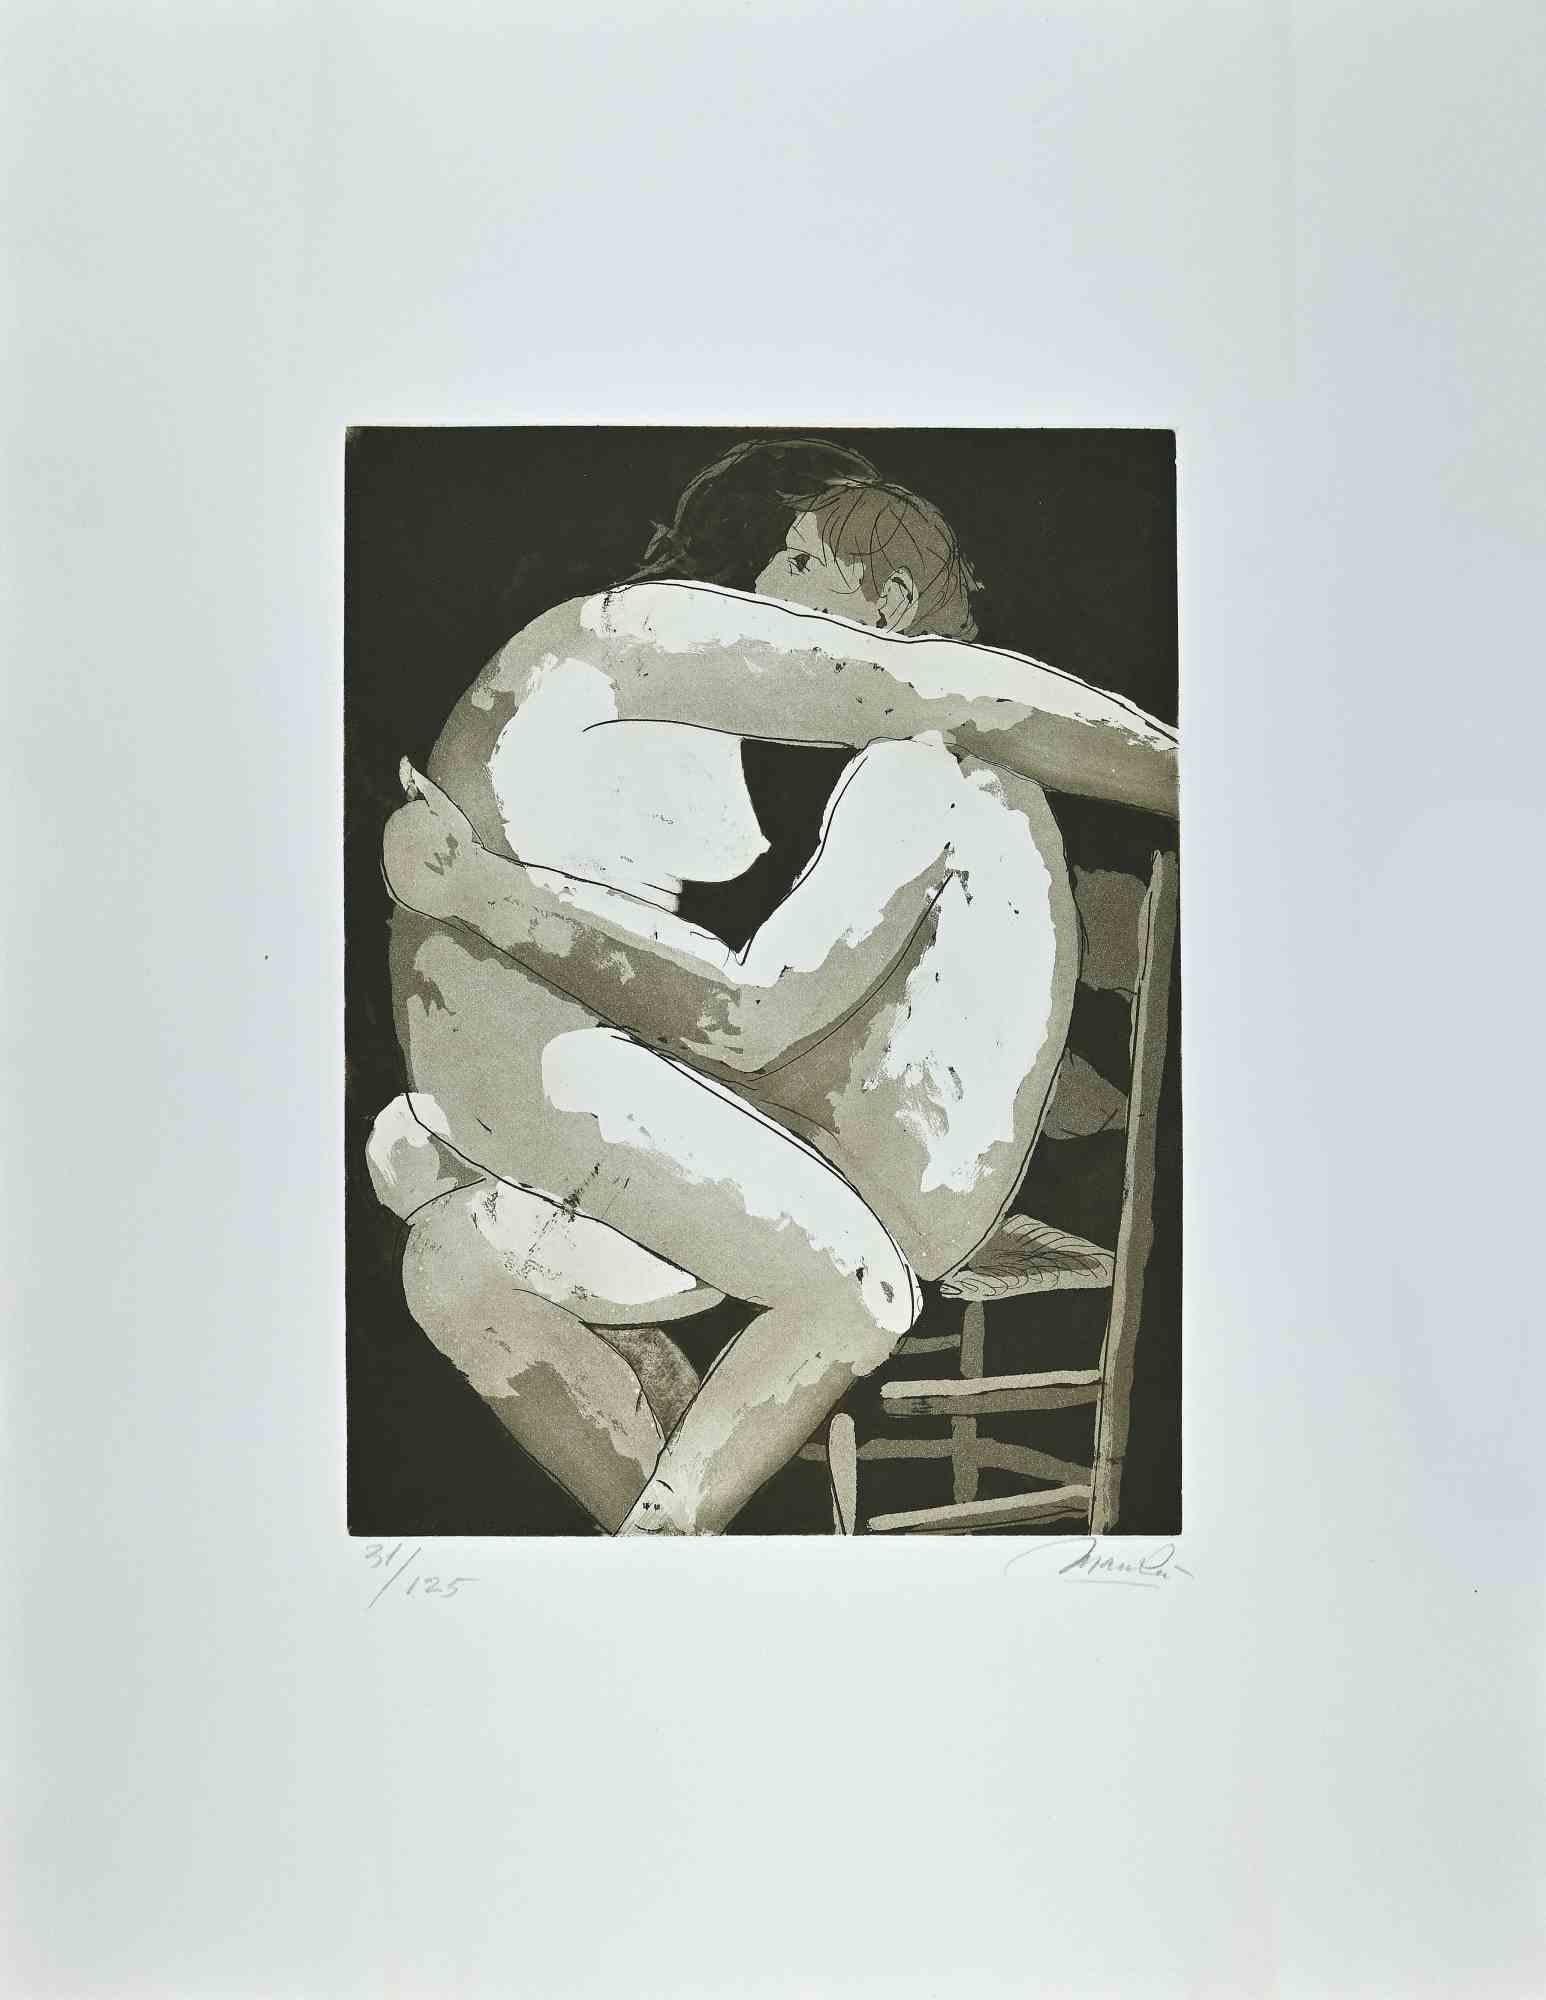 Lovers I  - Etching by Giacomo Manzù - 1970